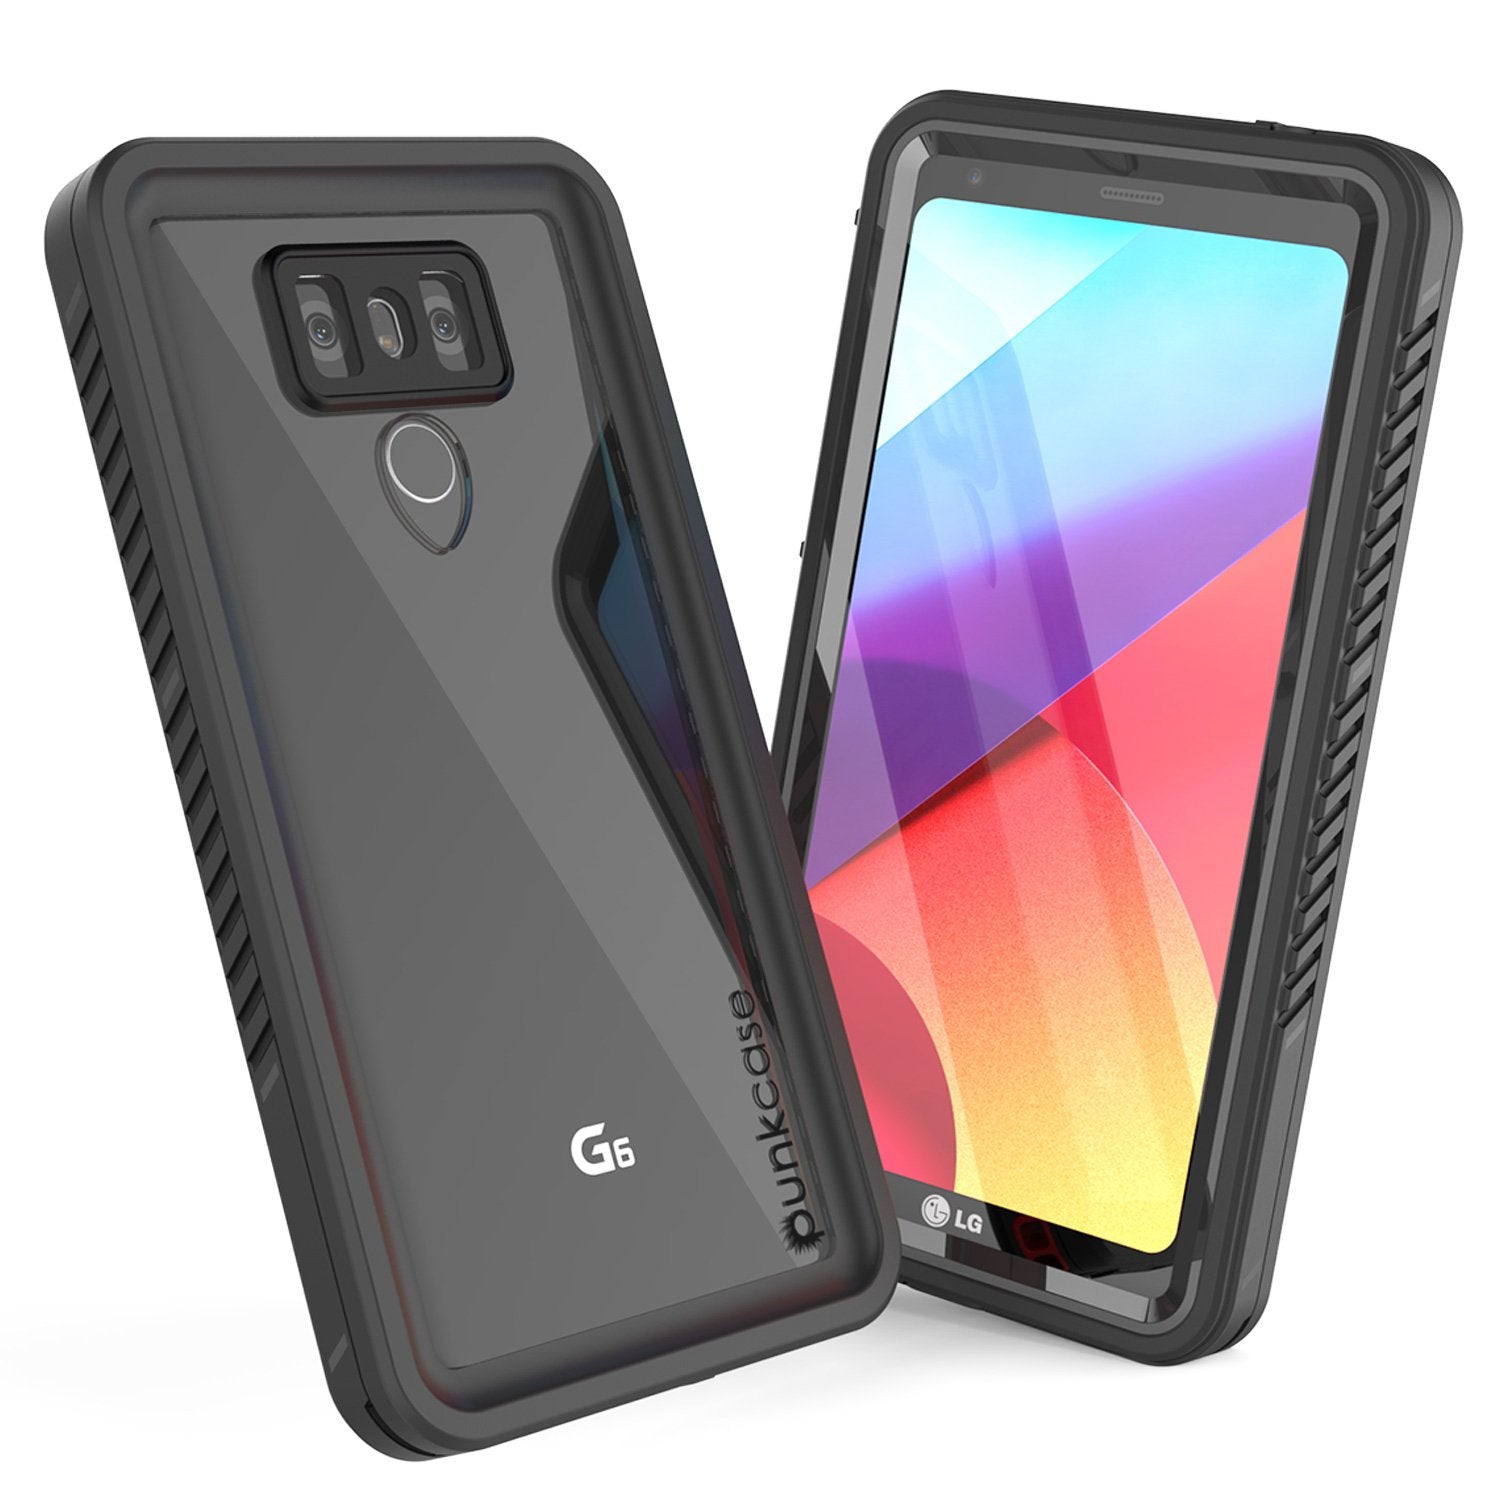 LG G6 Waterproof Case, Punkcase Extreme Series Slim Fit [BLACK]